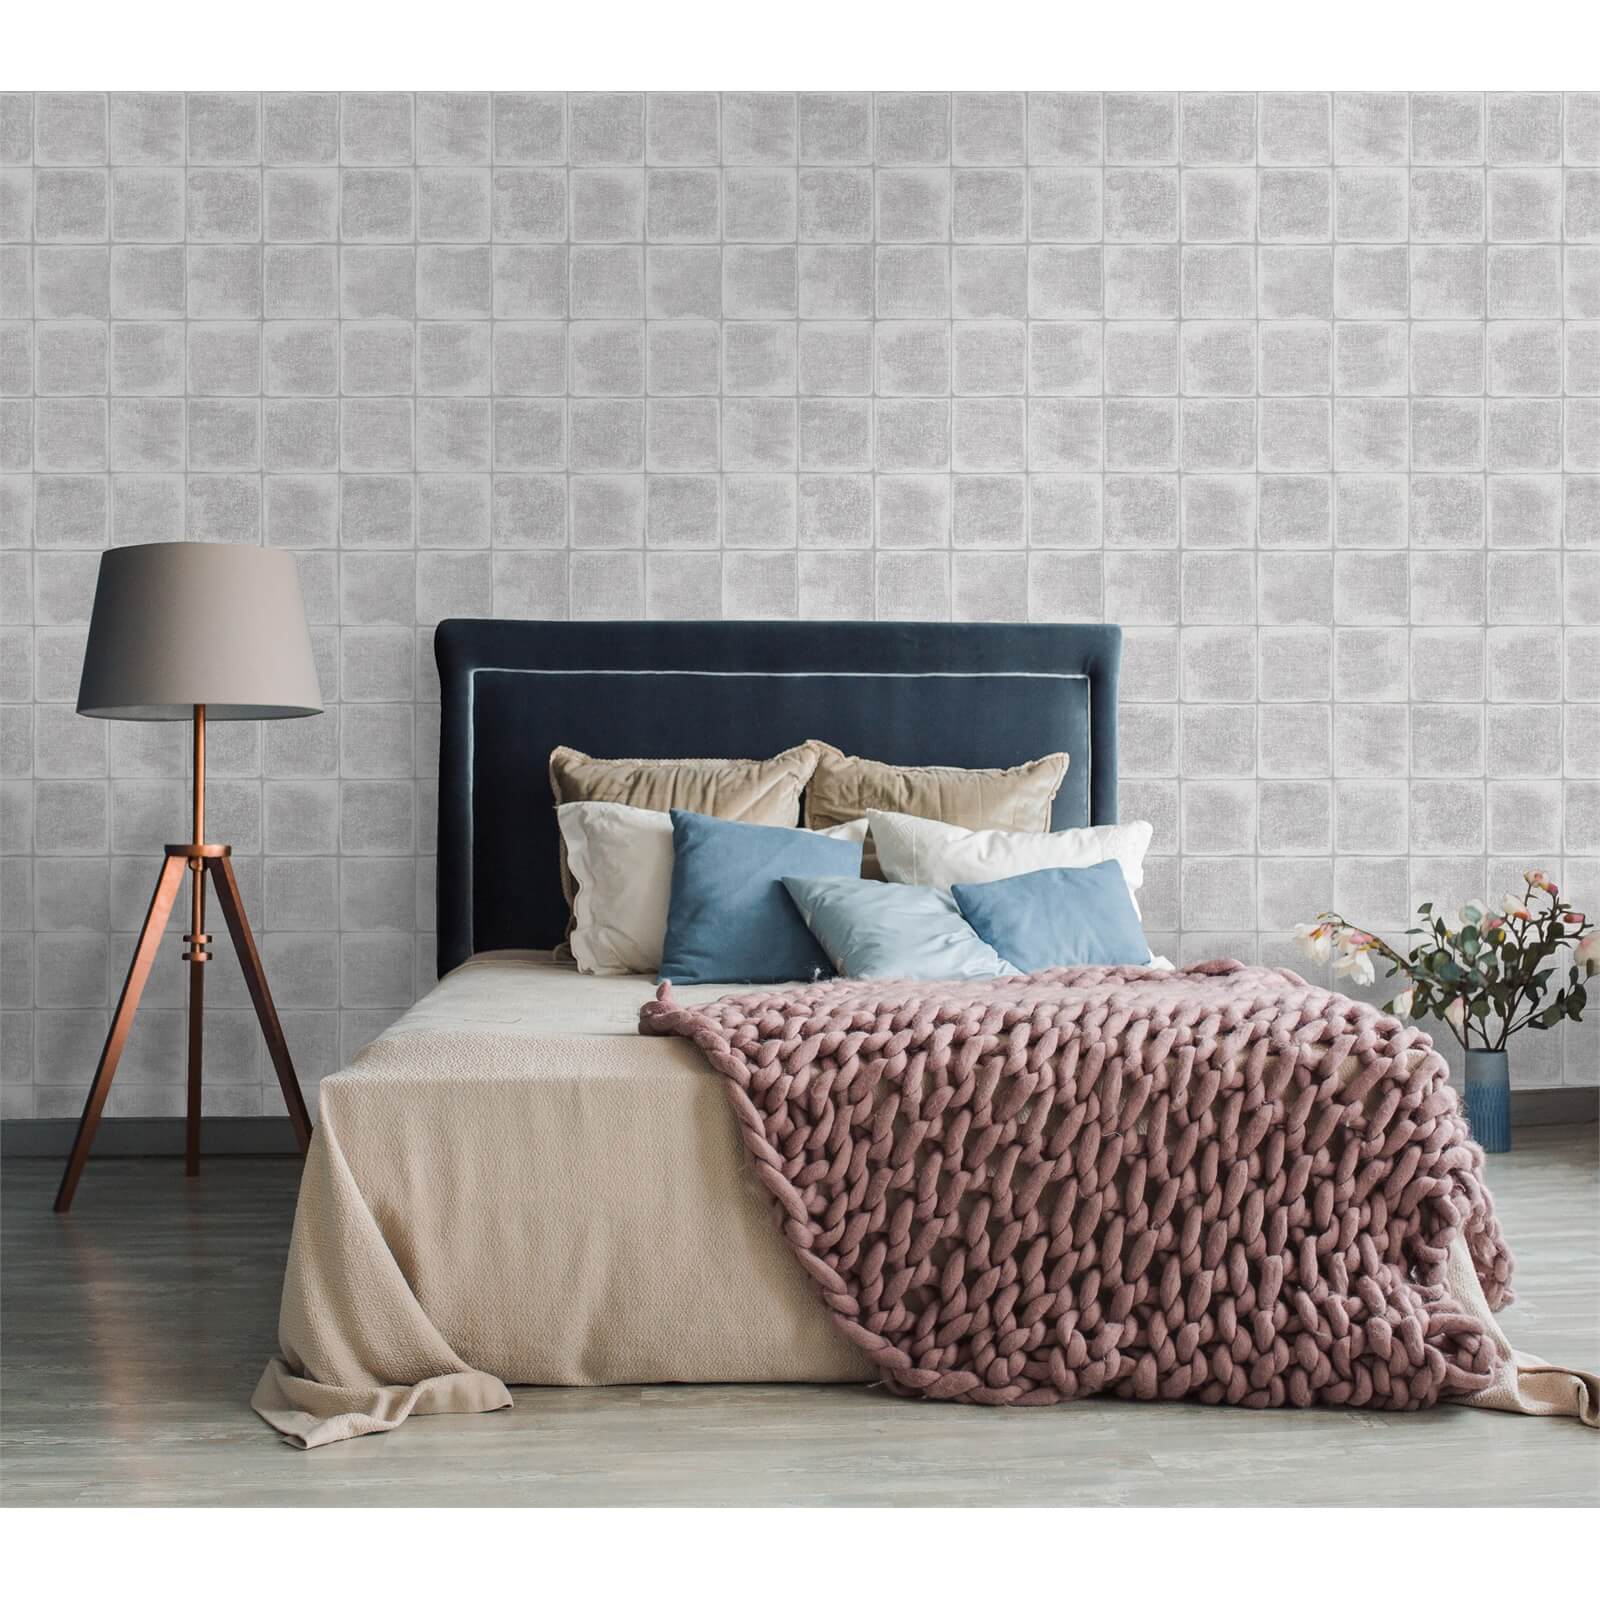 Holden Decor Furano Tile Textured Metallic Grey Wallpaper